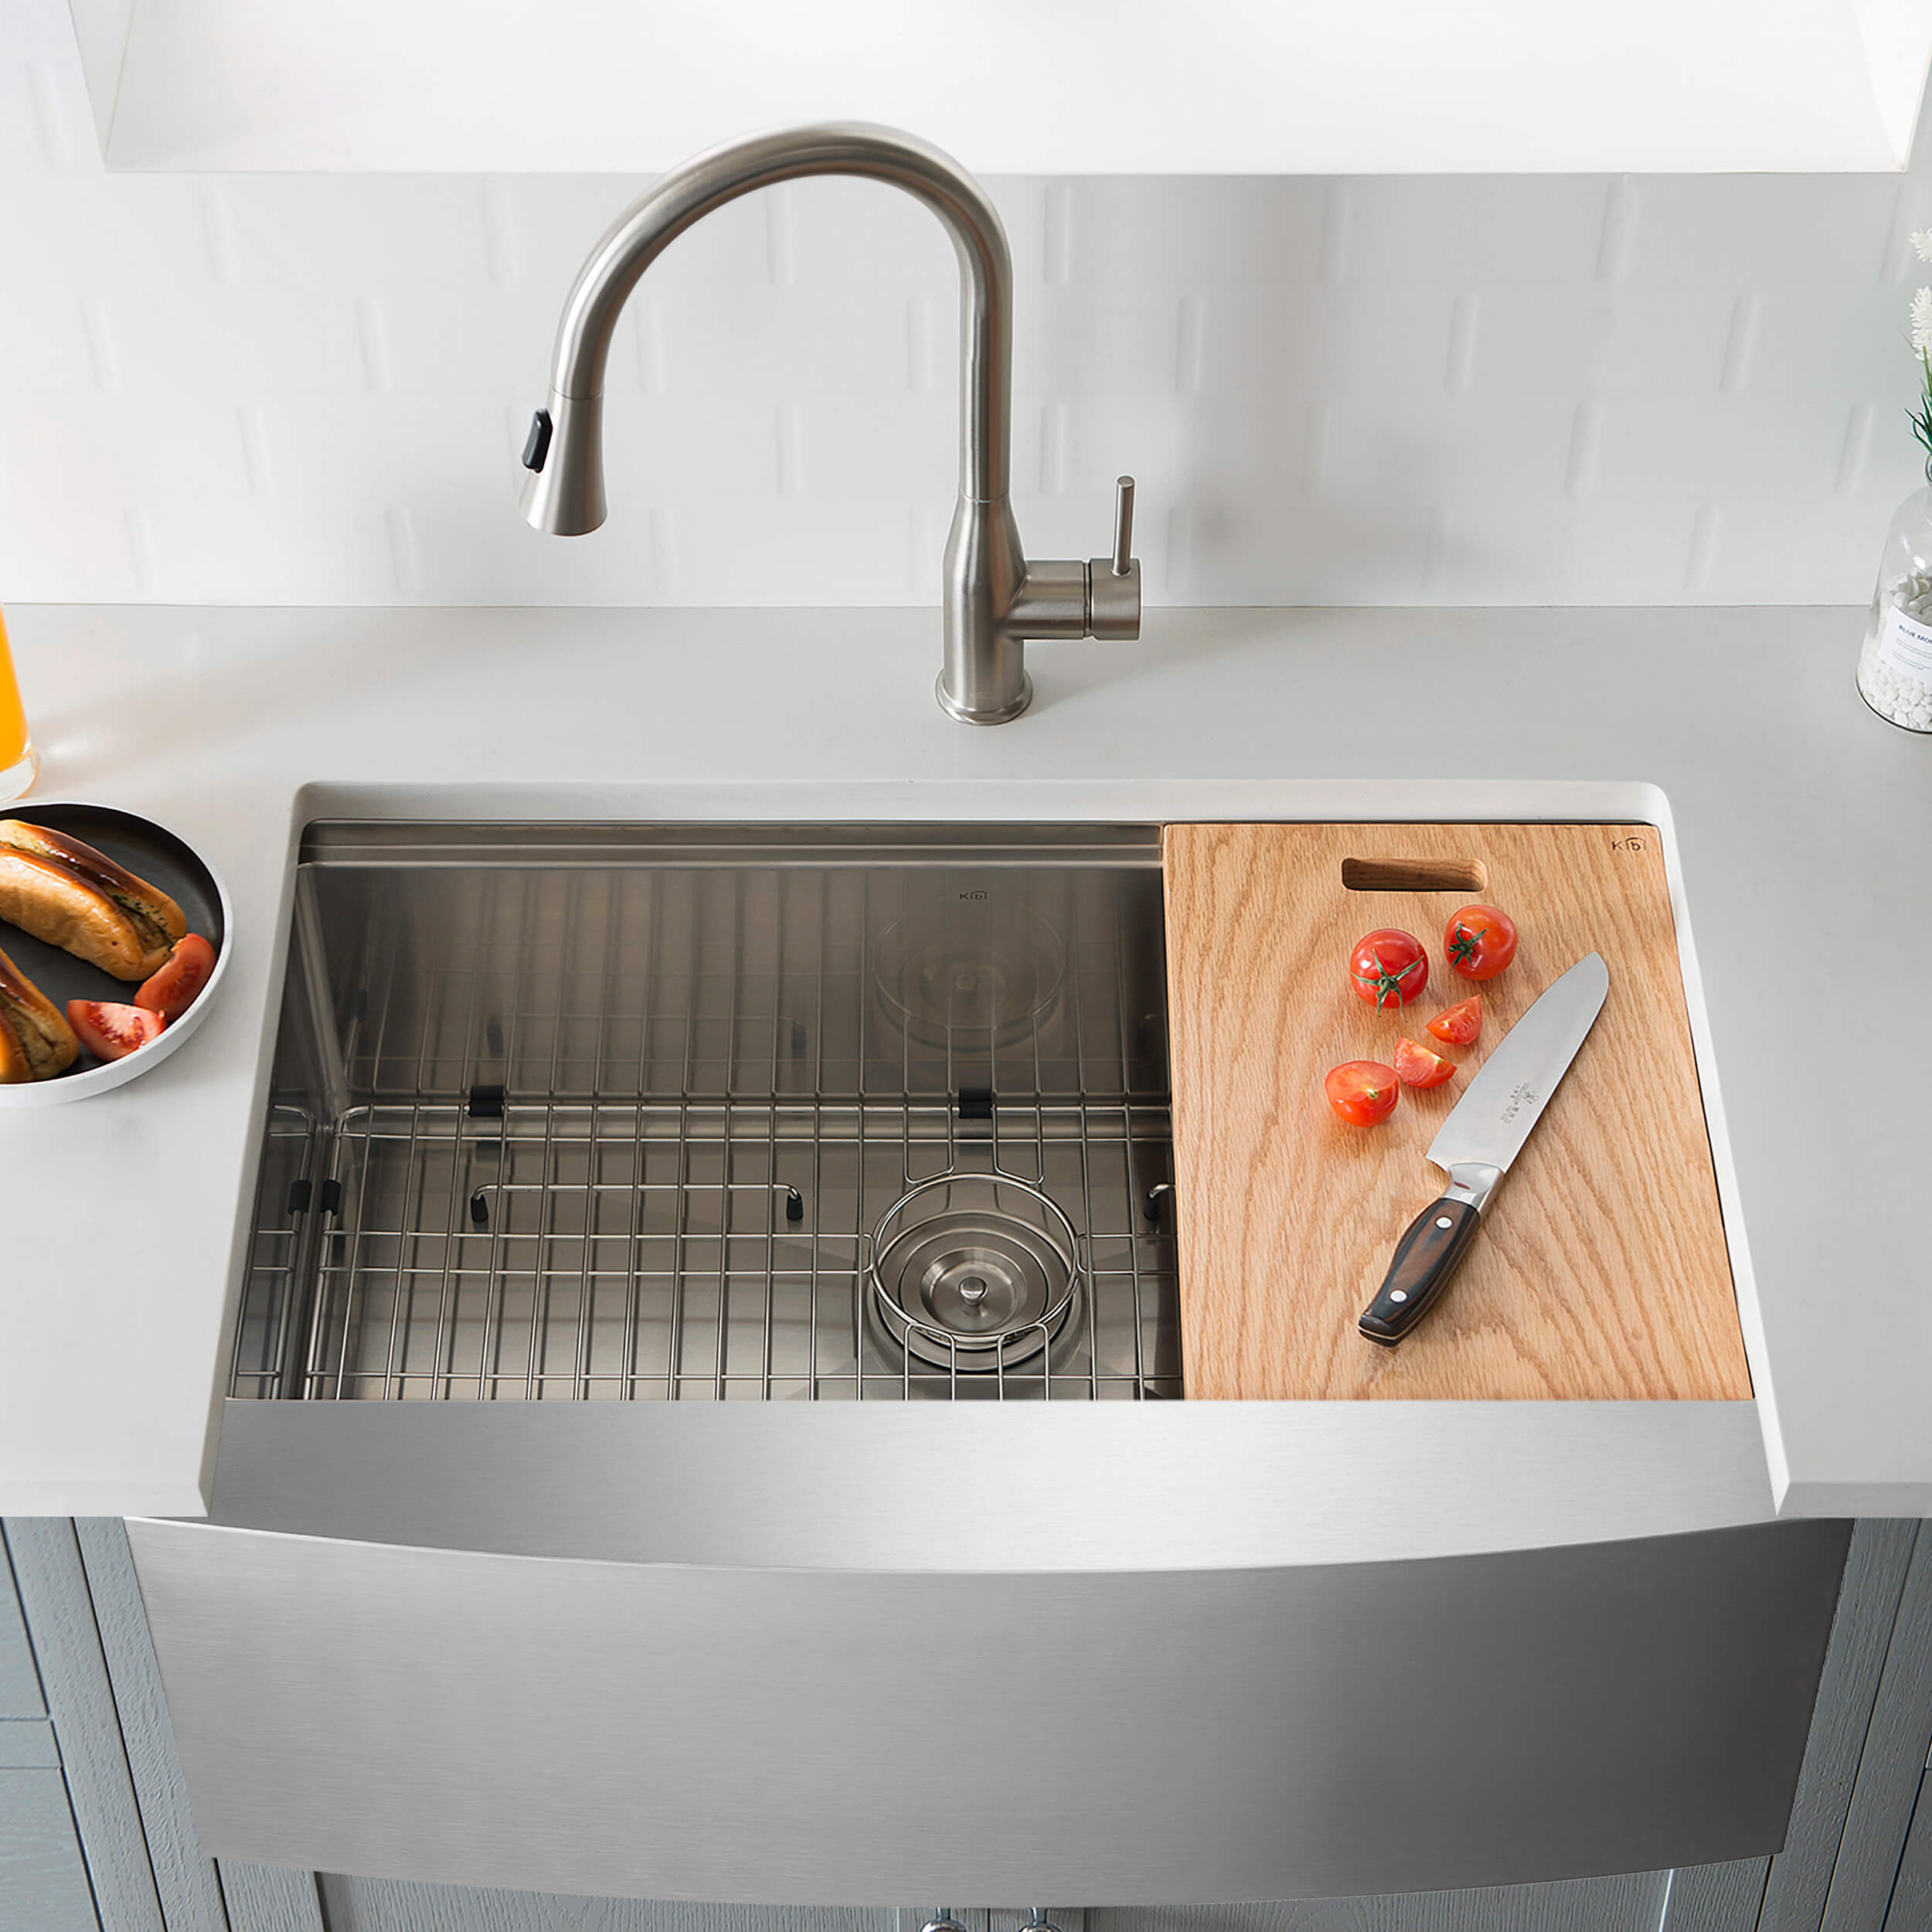 KIBI 27″ Undermount Single Bowl Stainless Steel Kitchen Sink Work Station K1-SF27T